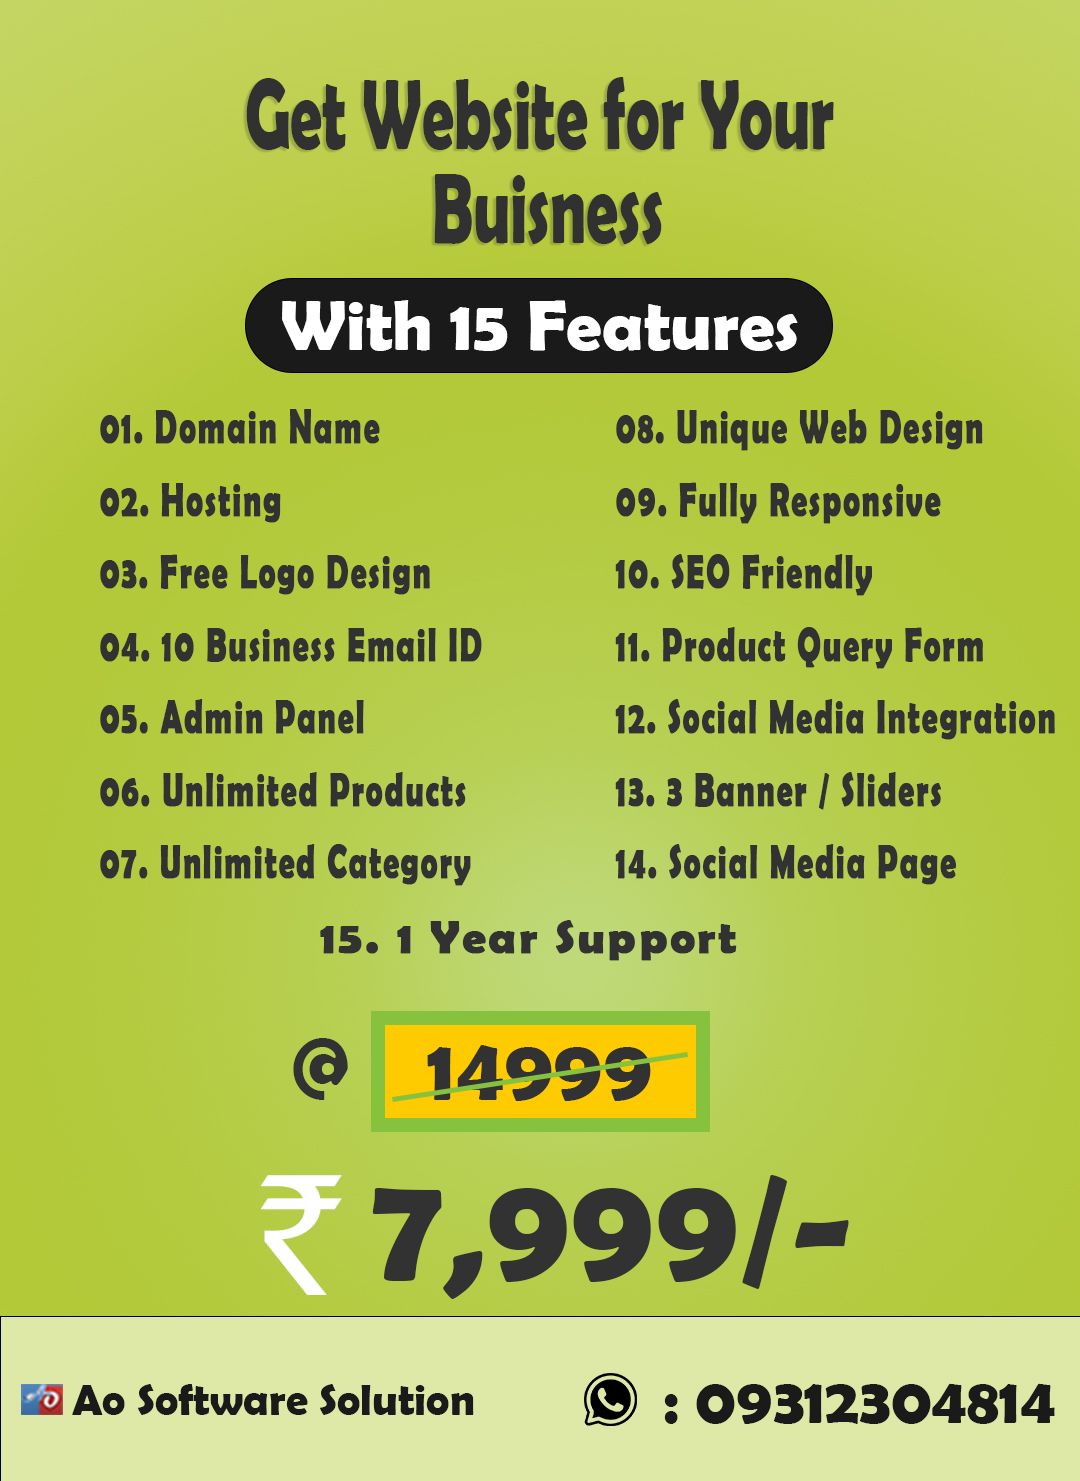 AO Software SolutionServicesAdvertising - DesignEast DelhiShakarpur